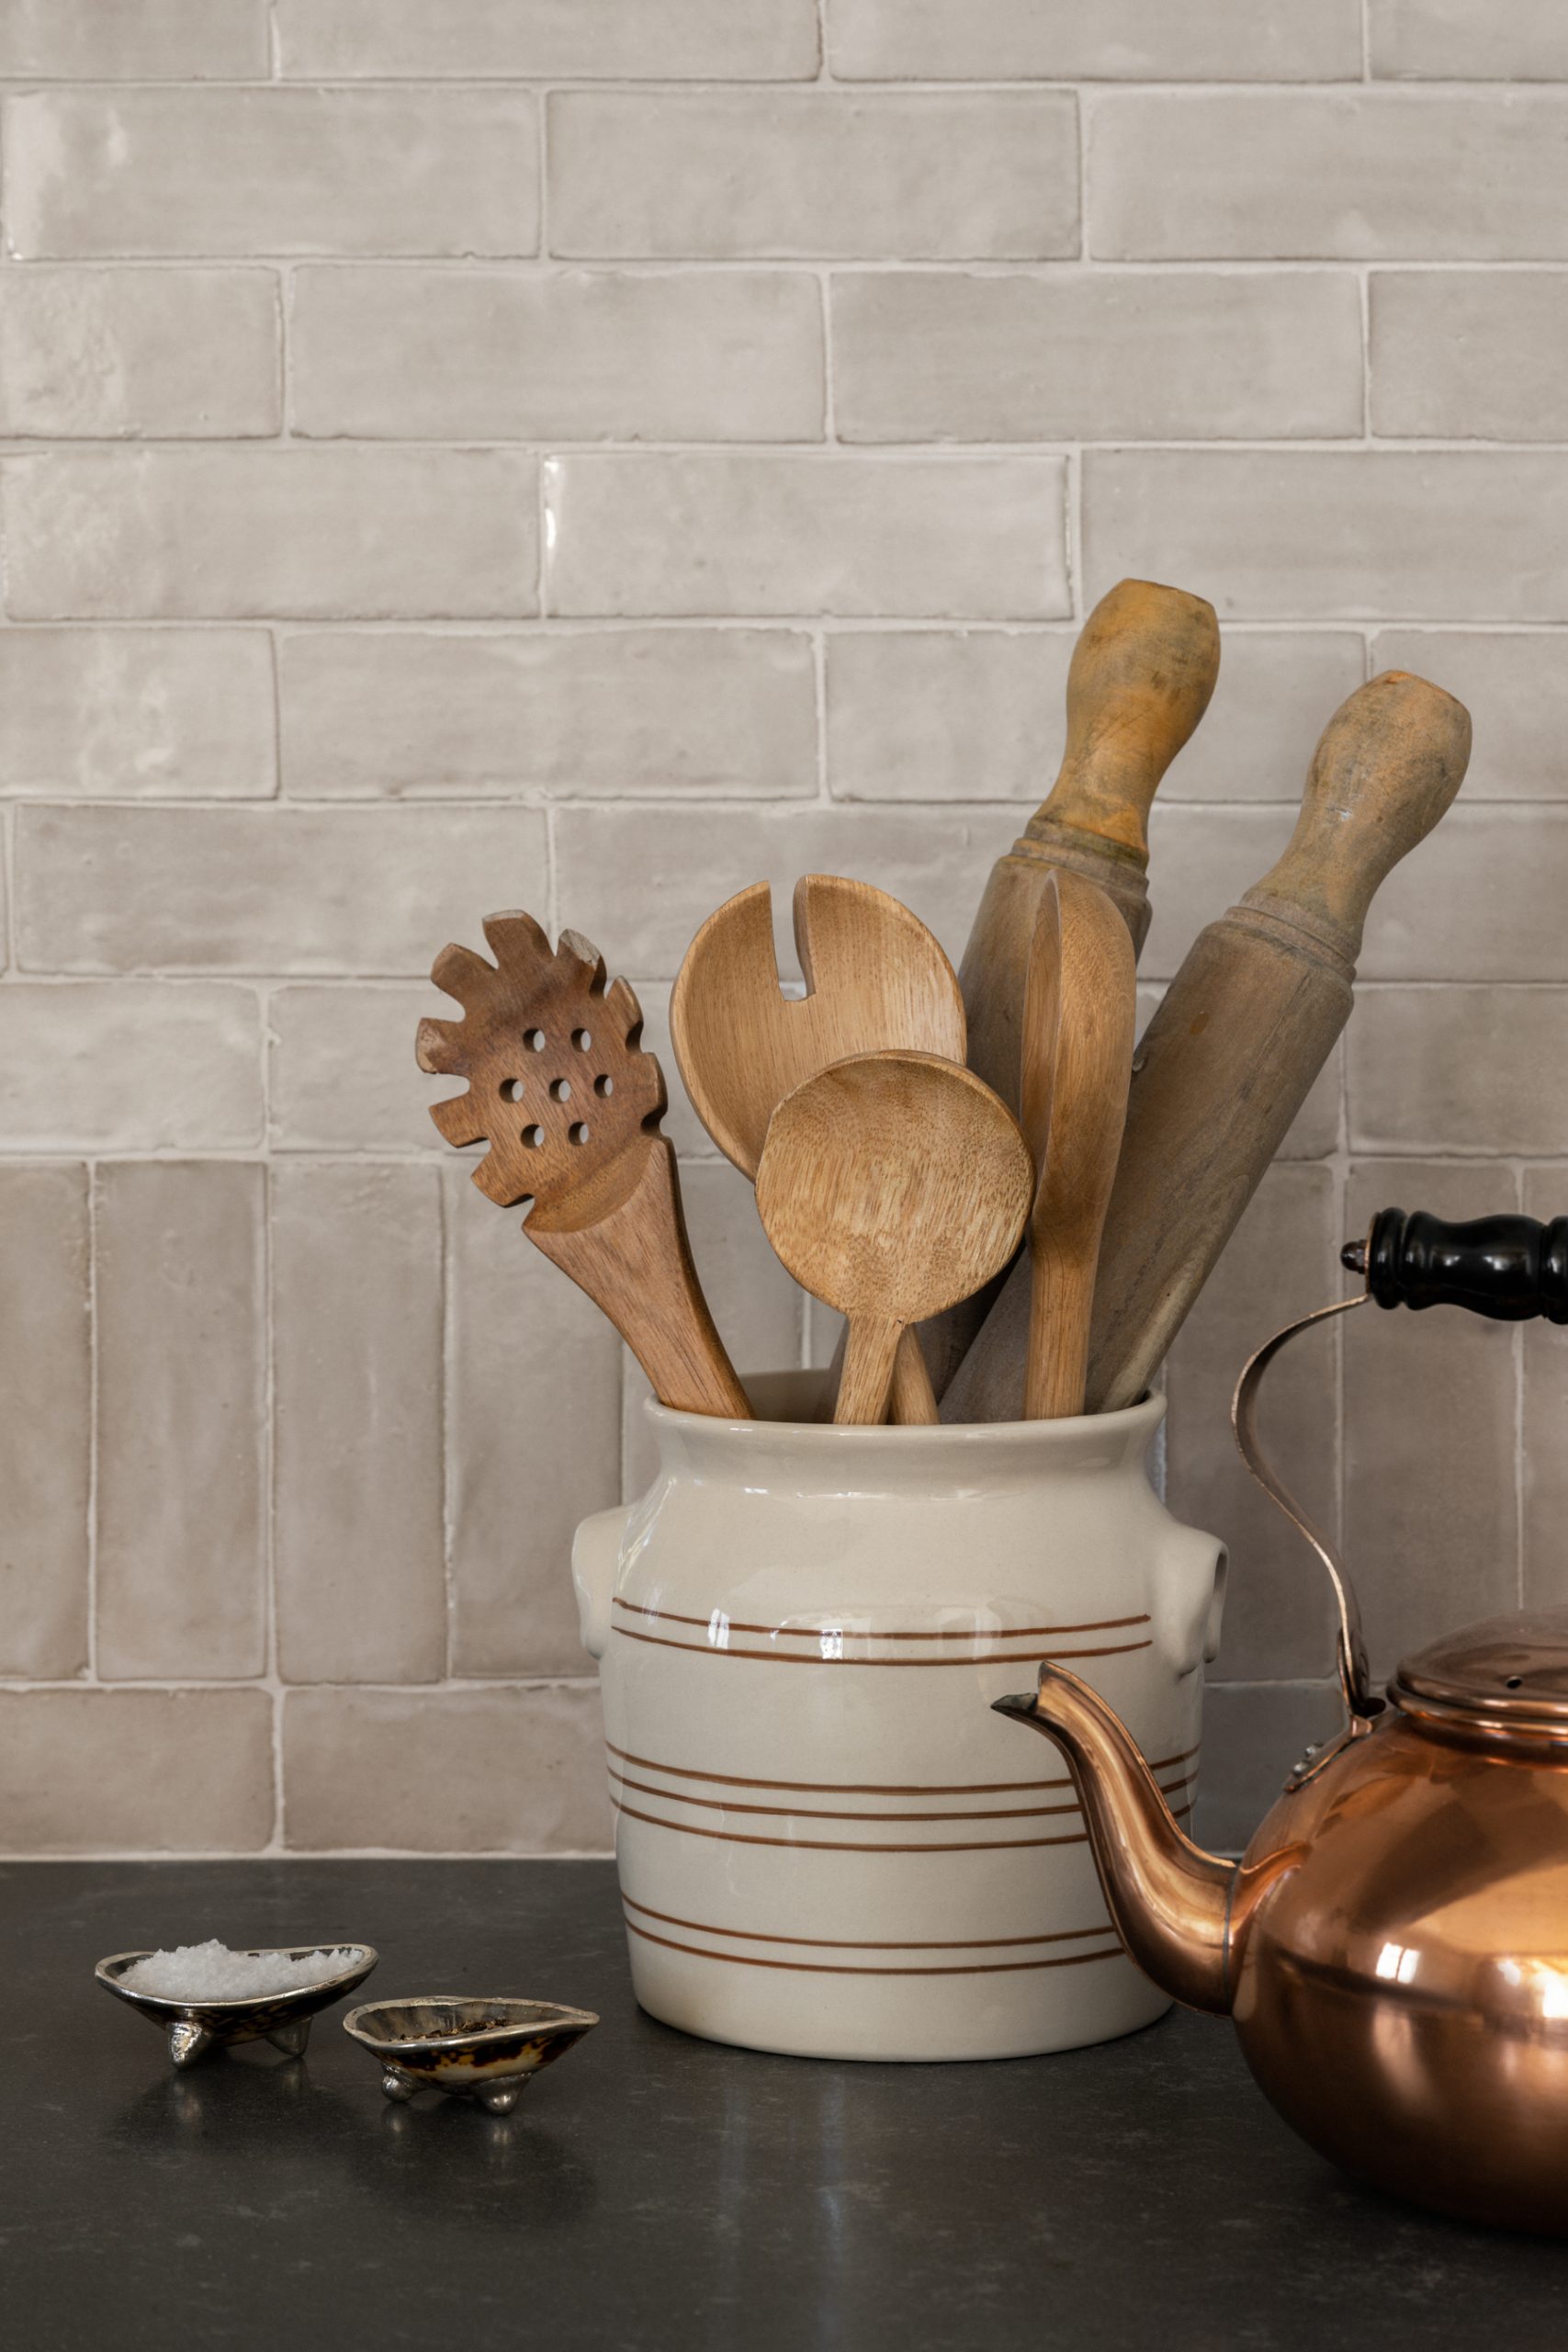 Ceramic crock holding wooden kitchen utensils